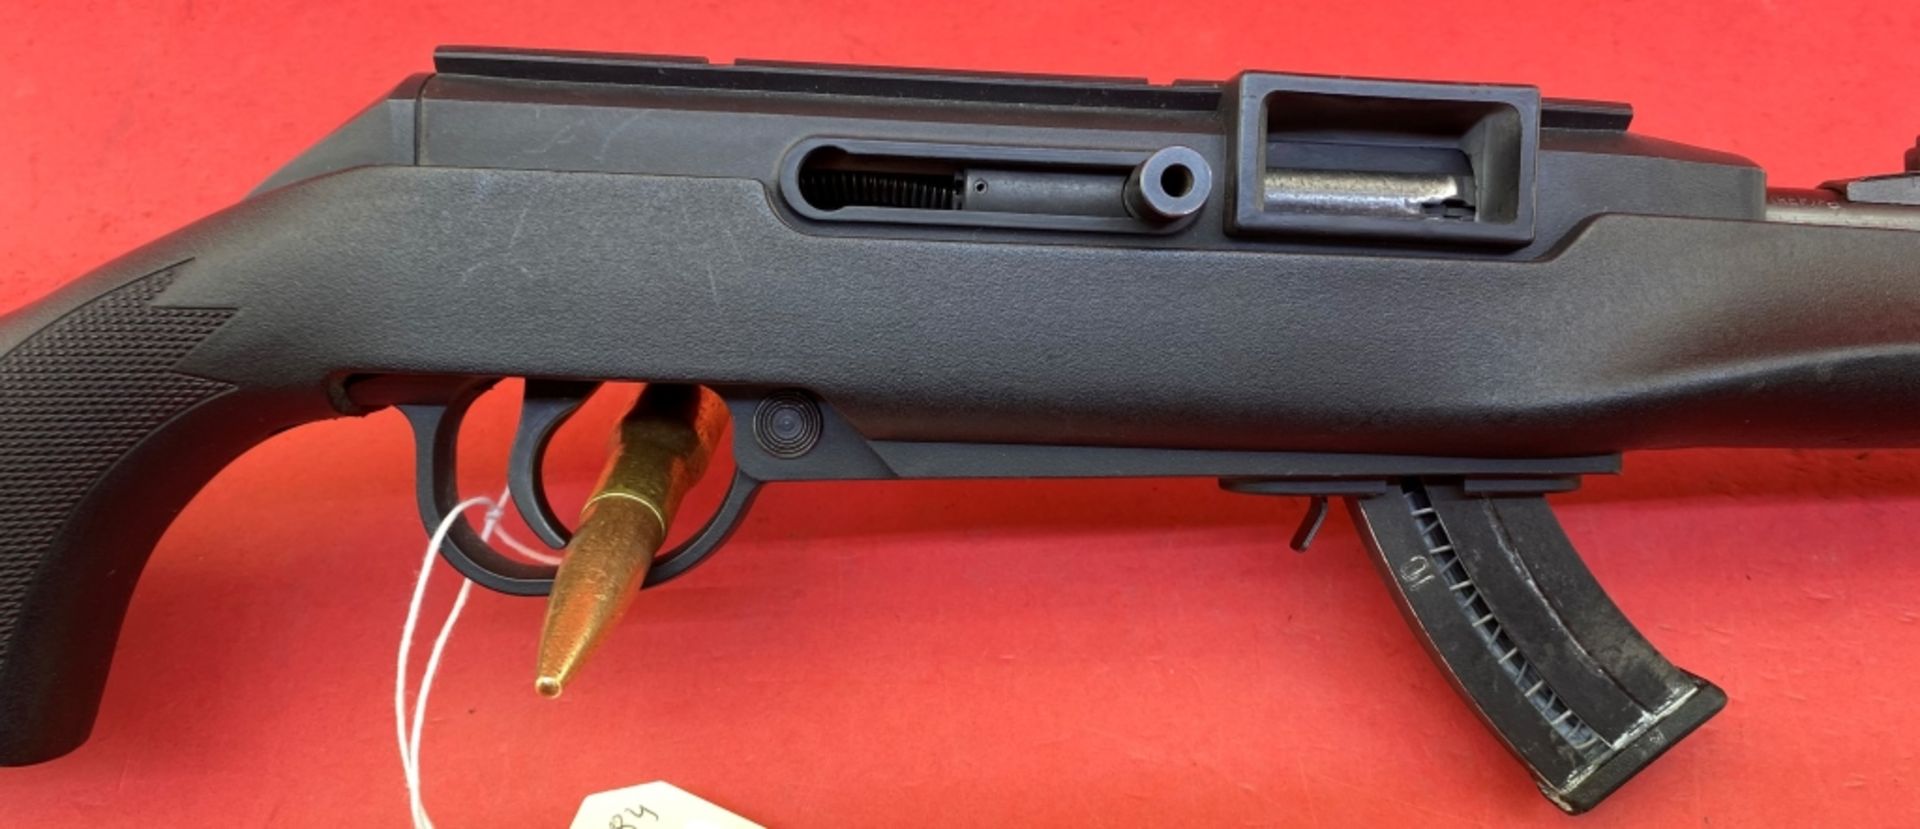 Remington 522 .22LR Rifle - Image 2 of 5